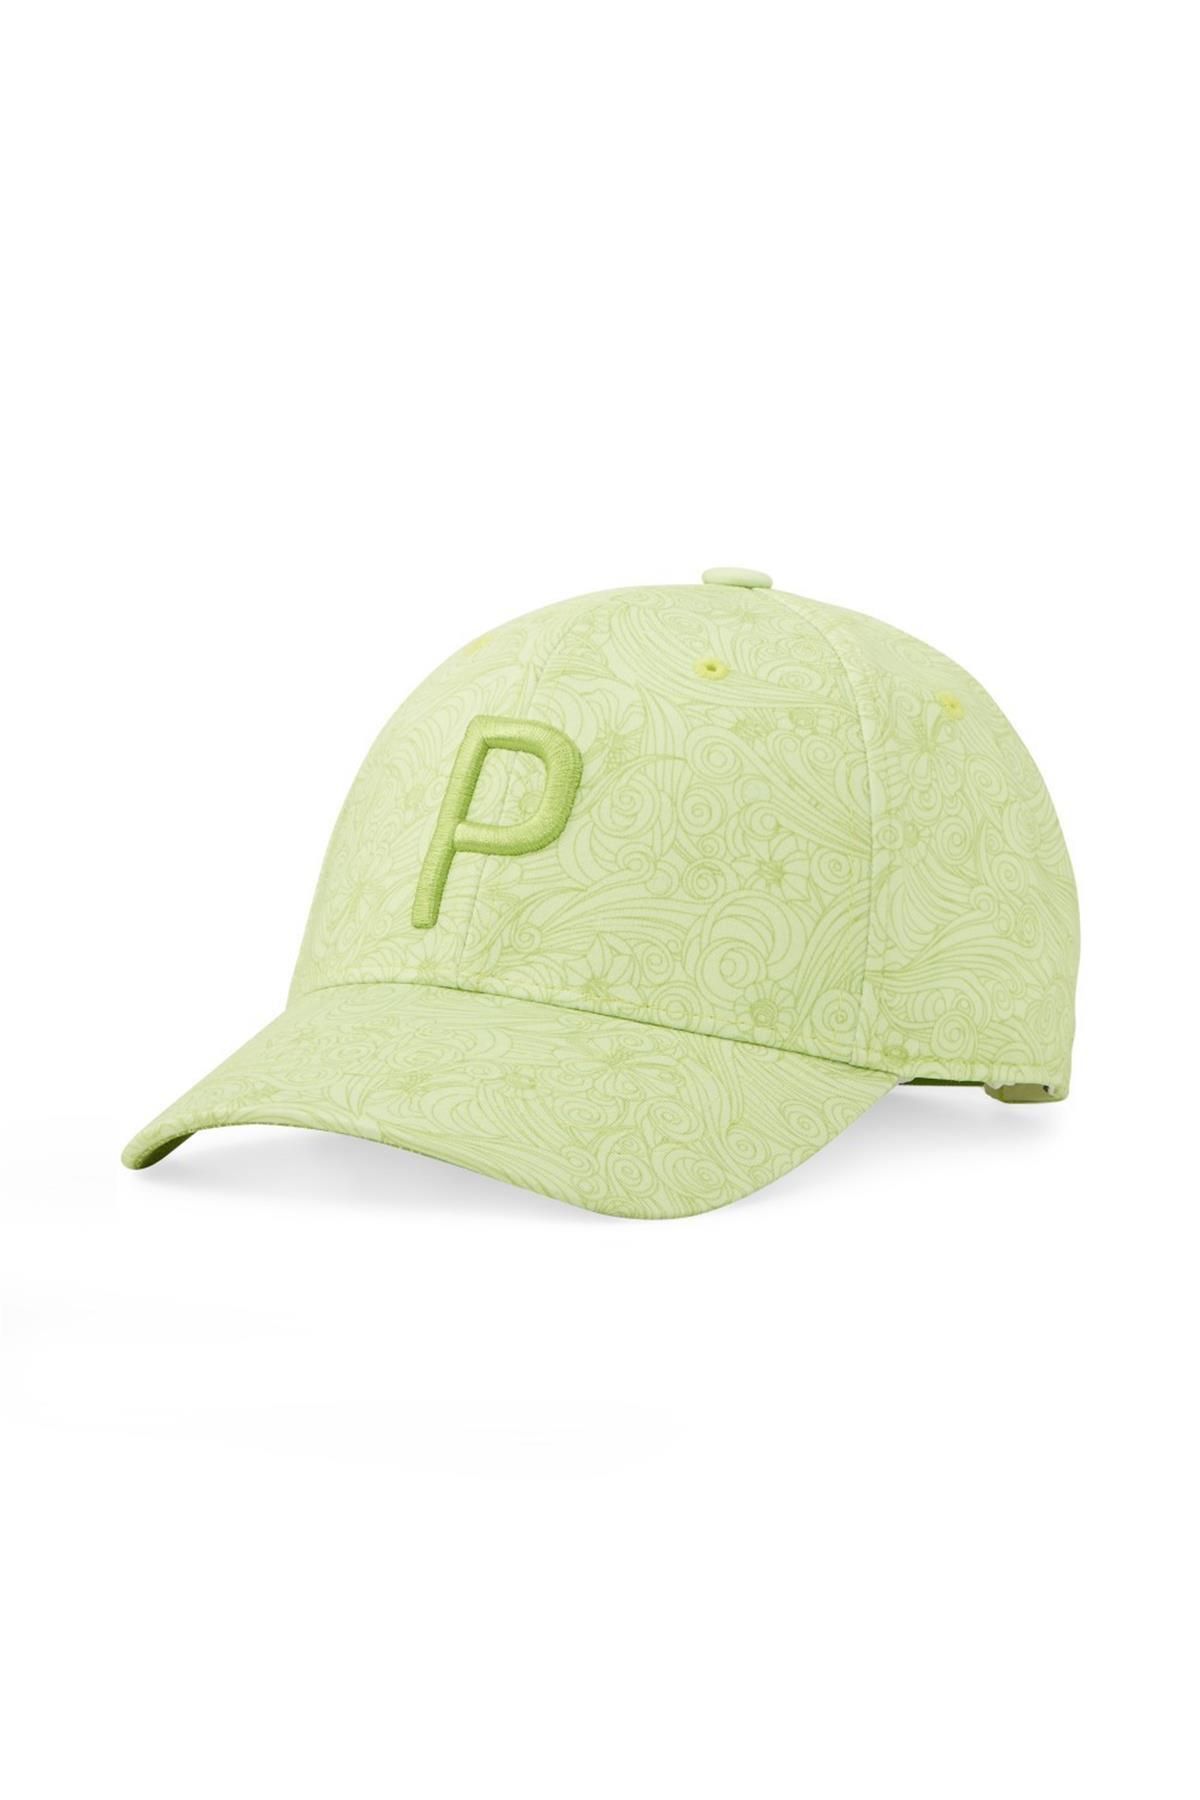 Puma Gust O'Wind P Snapback Cap - Unisex Tamamı Desenli Şapka